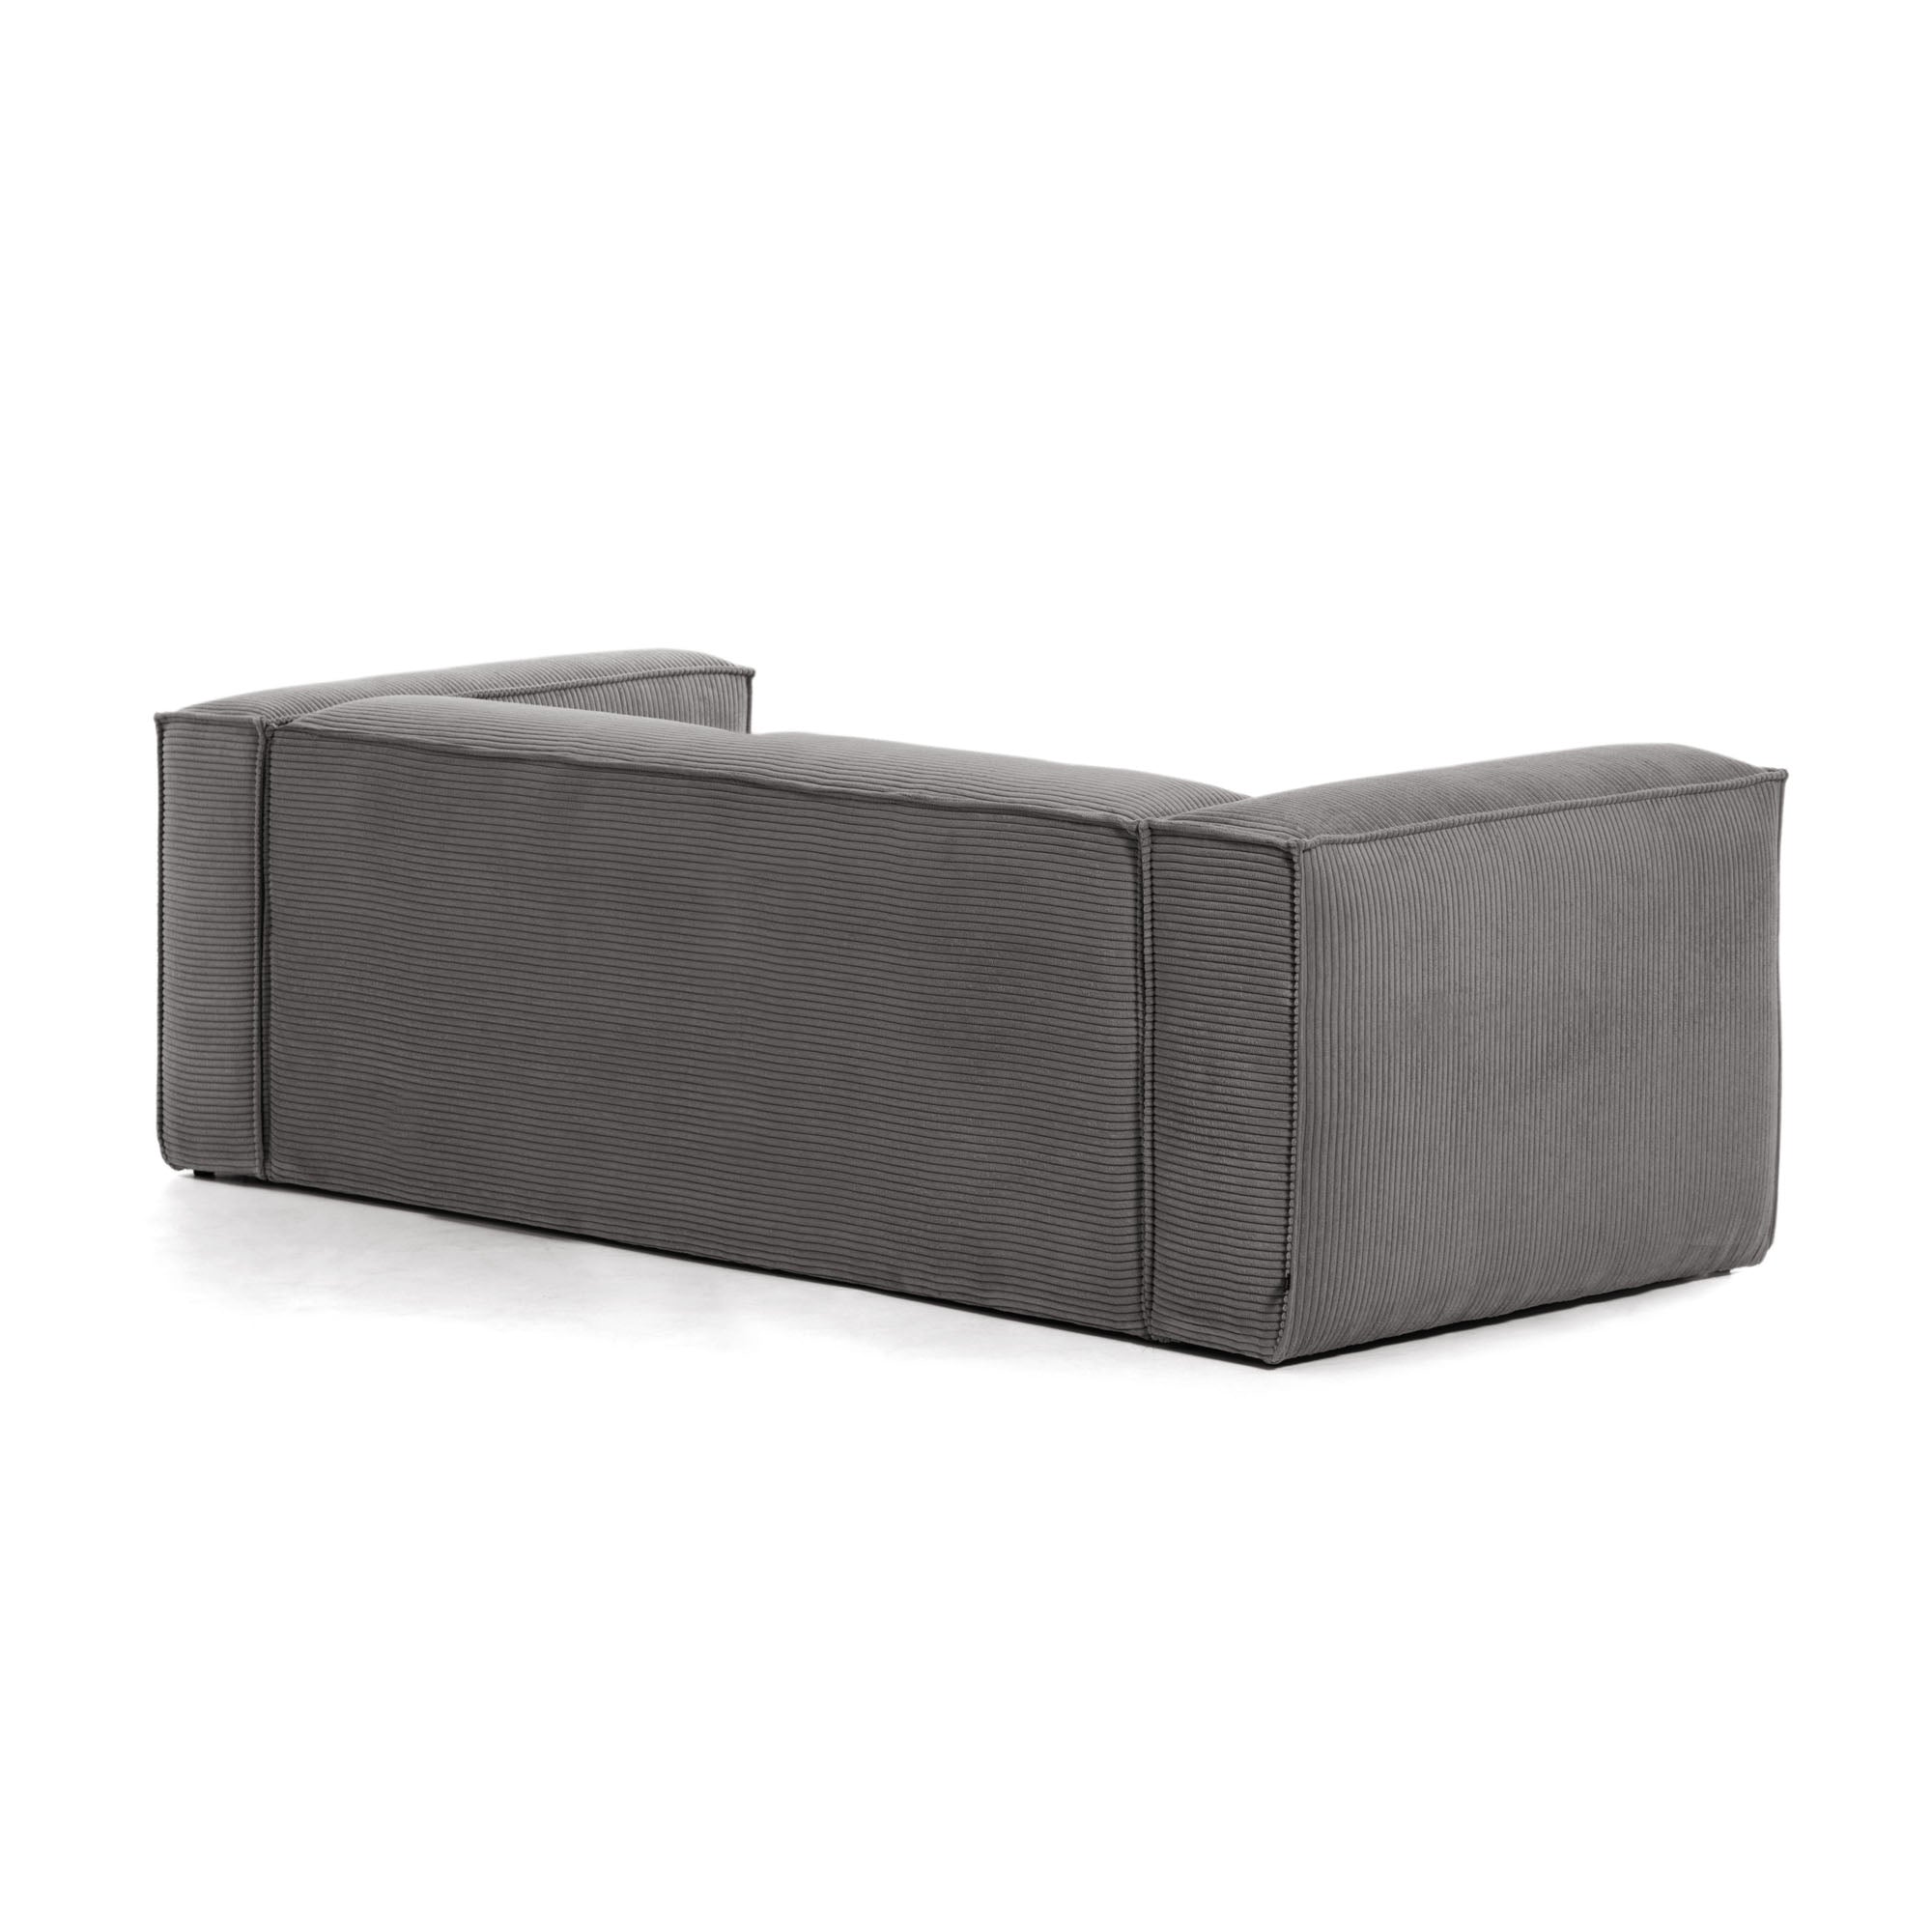 Blok 2 seater sofa in grey wide seam corduroy, 210 cm